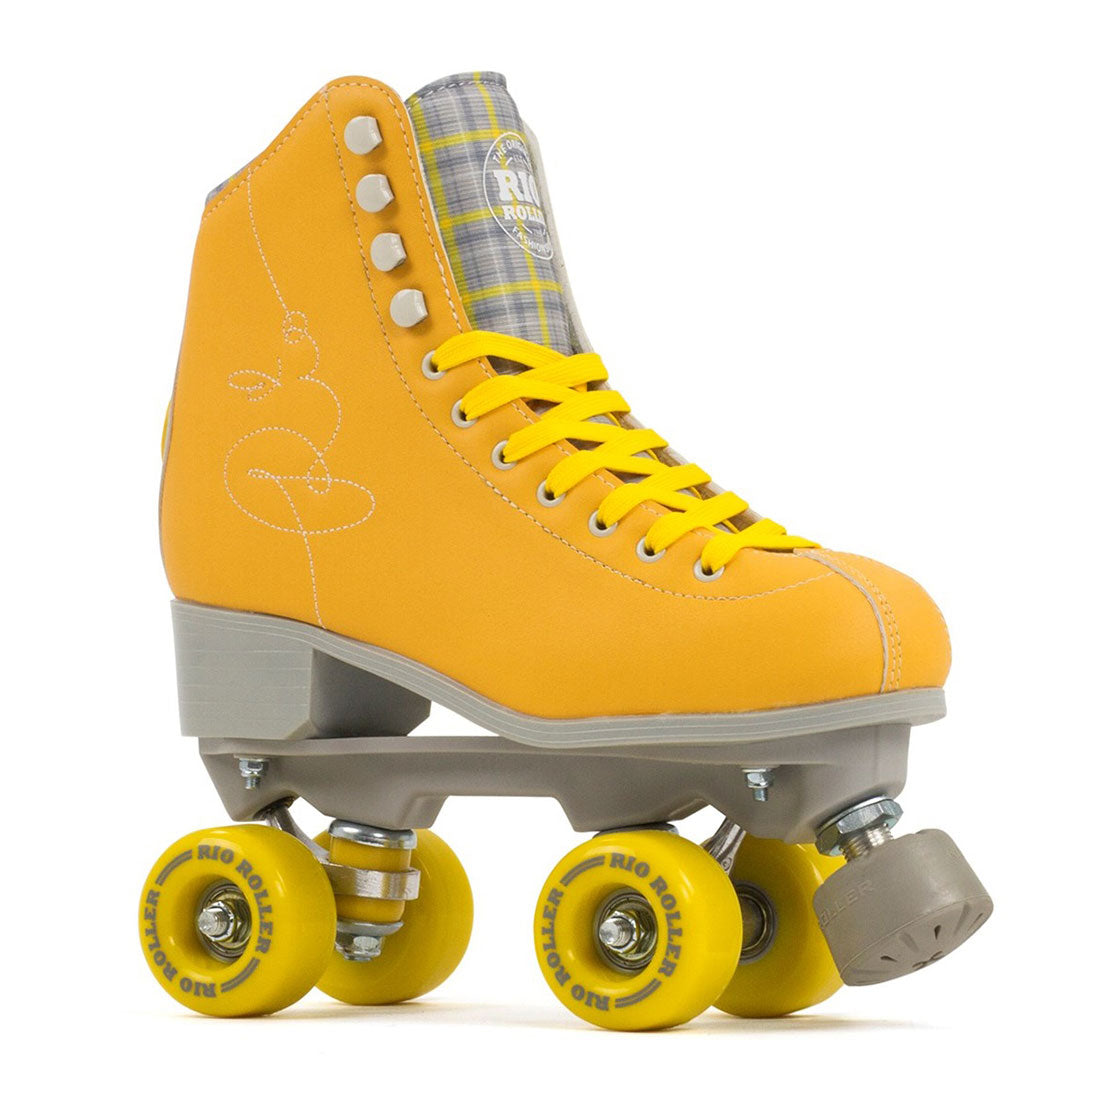 Rio Roller Signature - Yellow Roller Skates